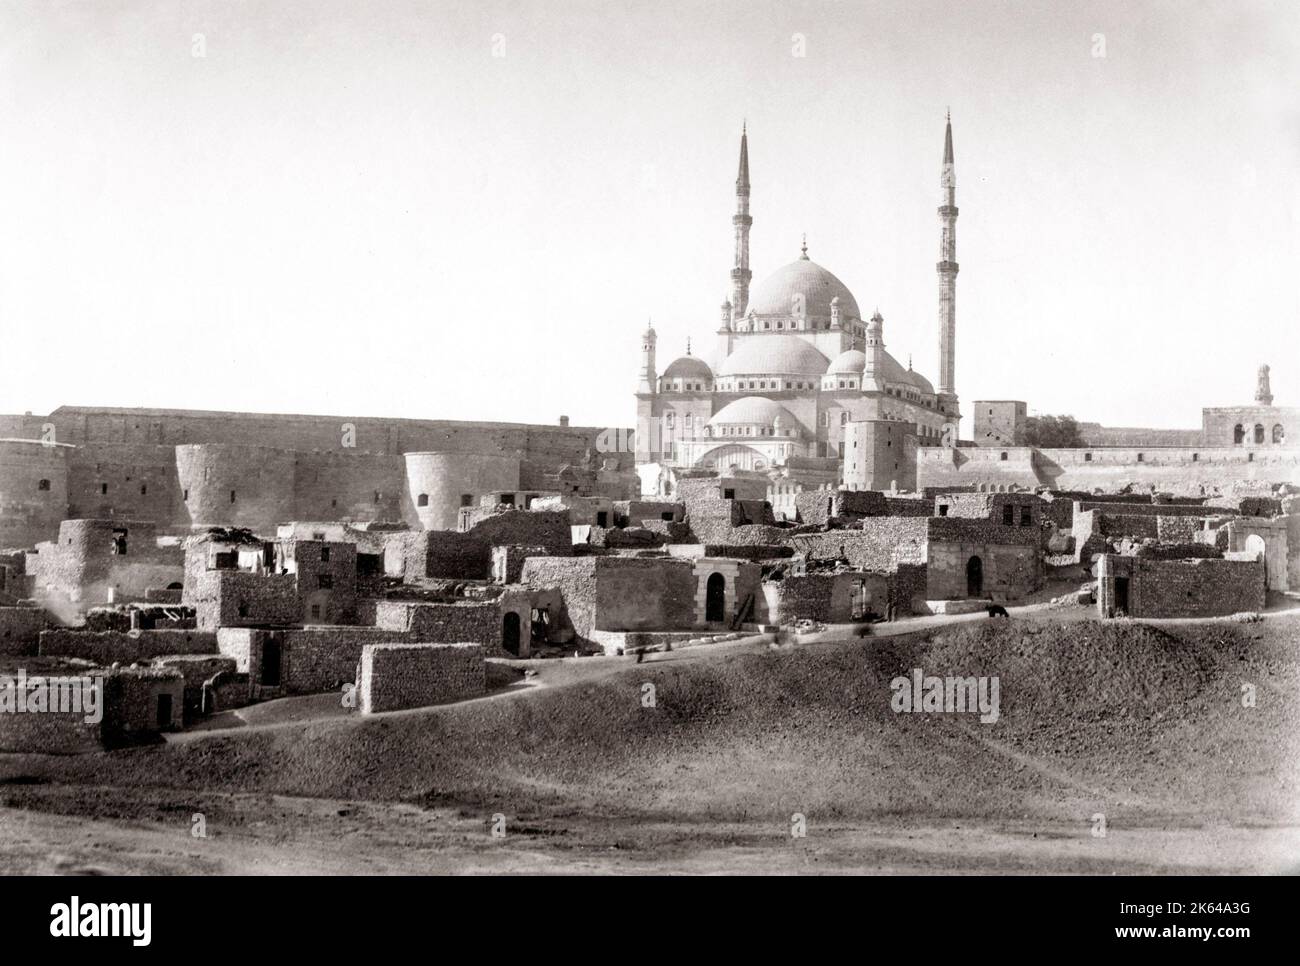 The Saladin Citadel of Cairo, medieval Islamic fortress, Egypt, c.1880's Stock Photo